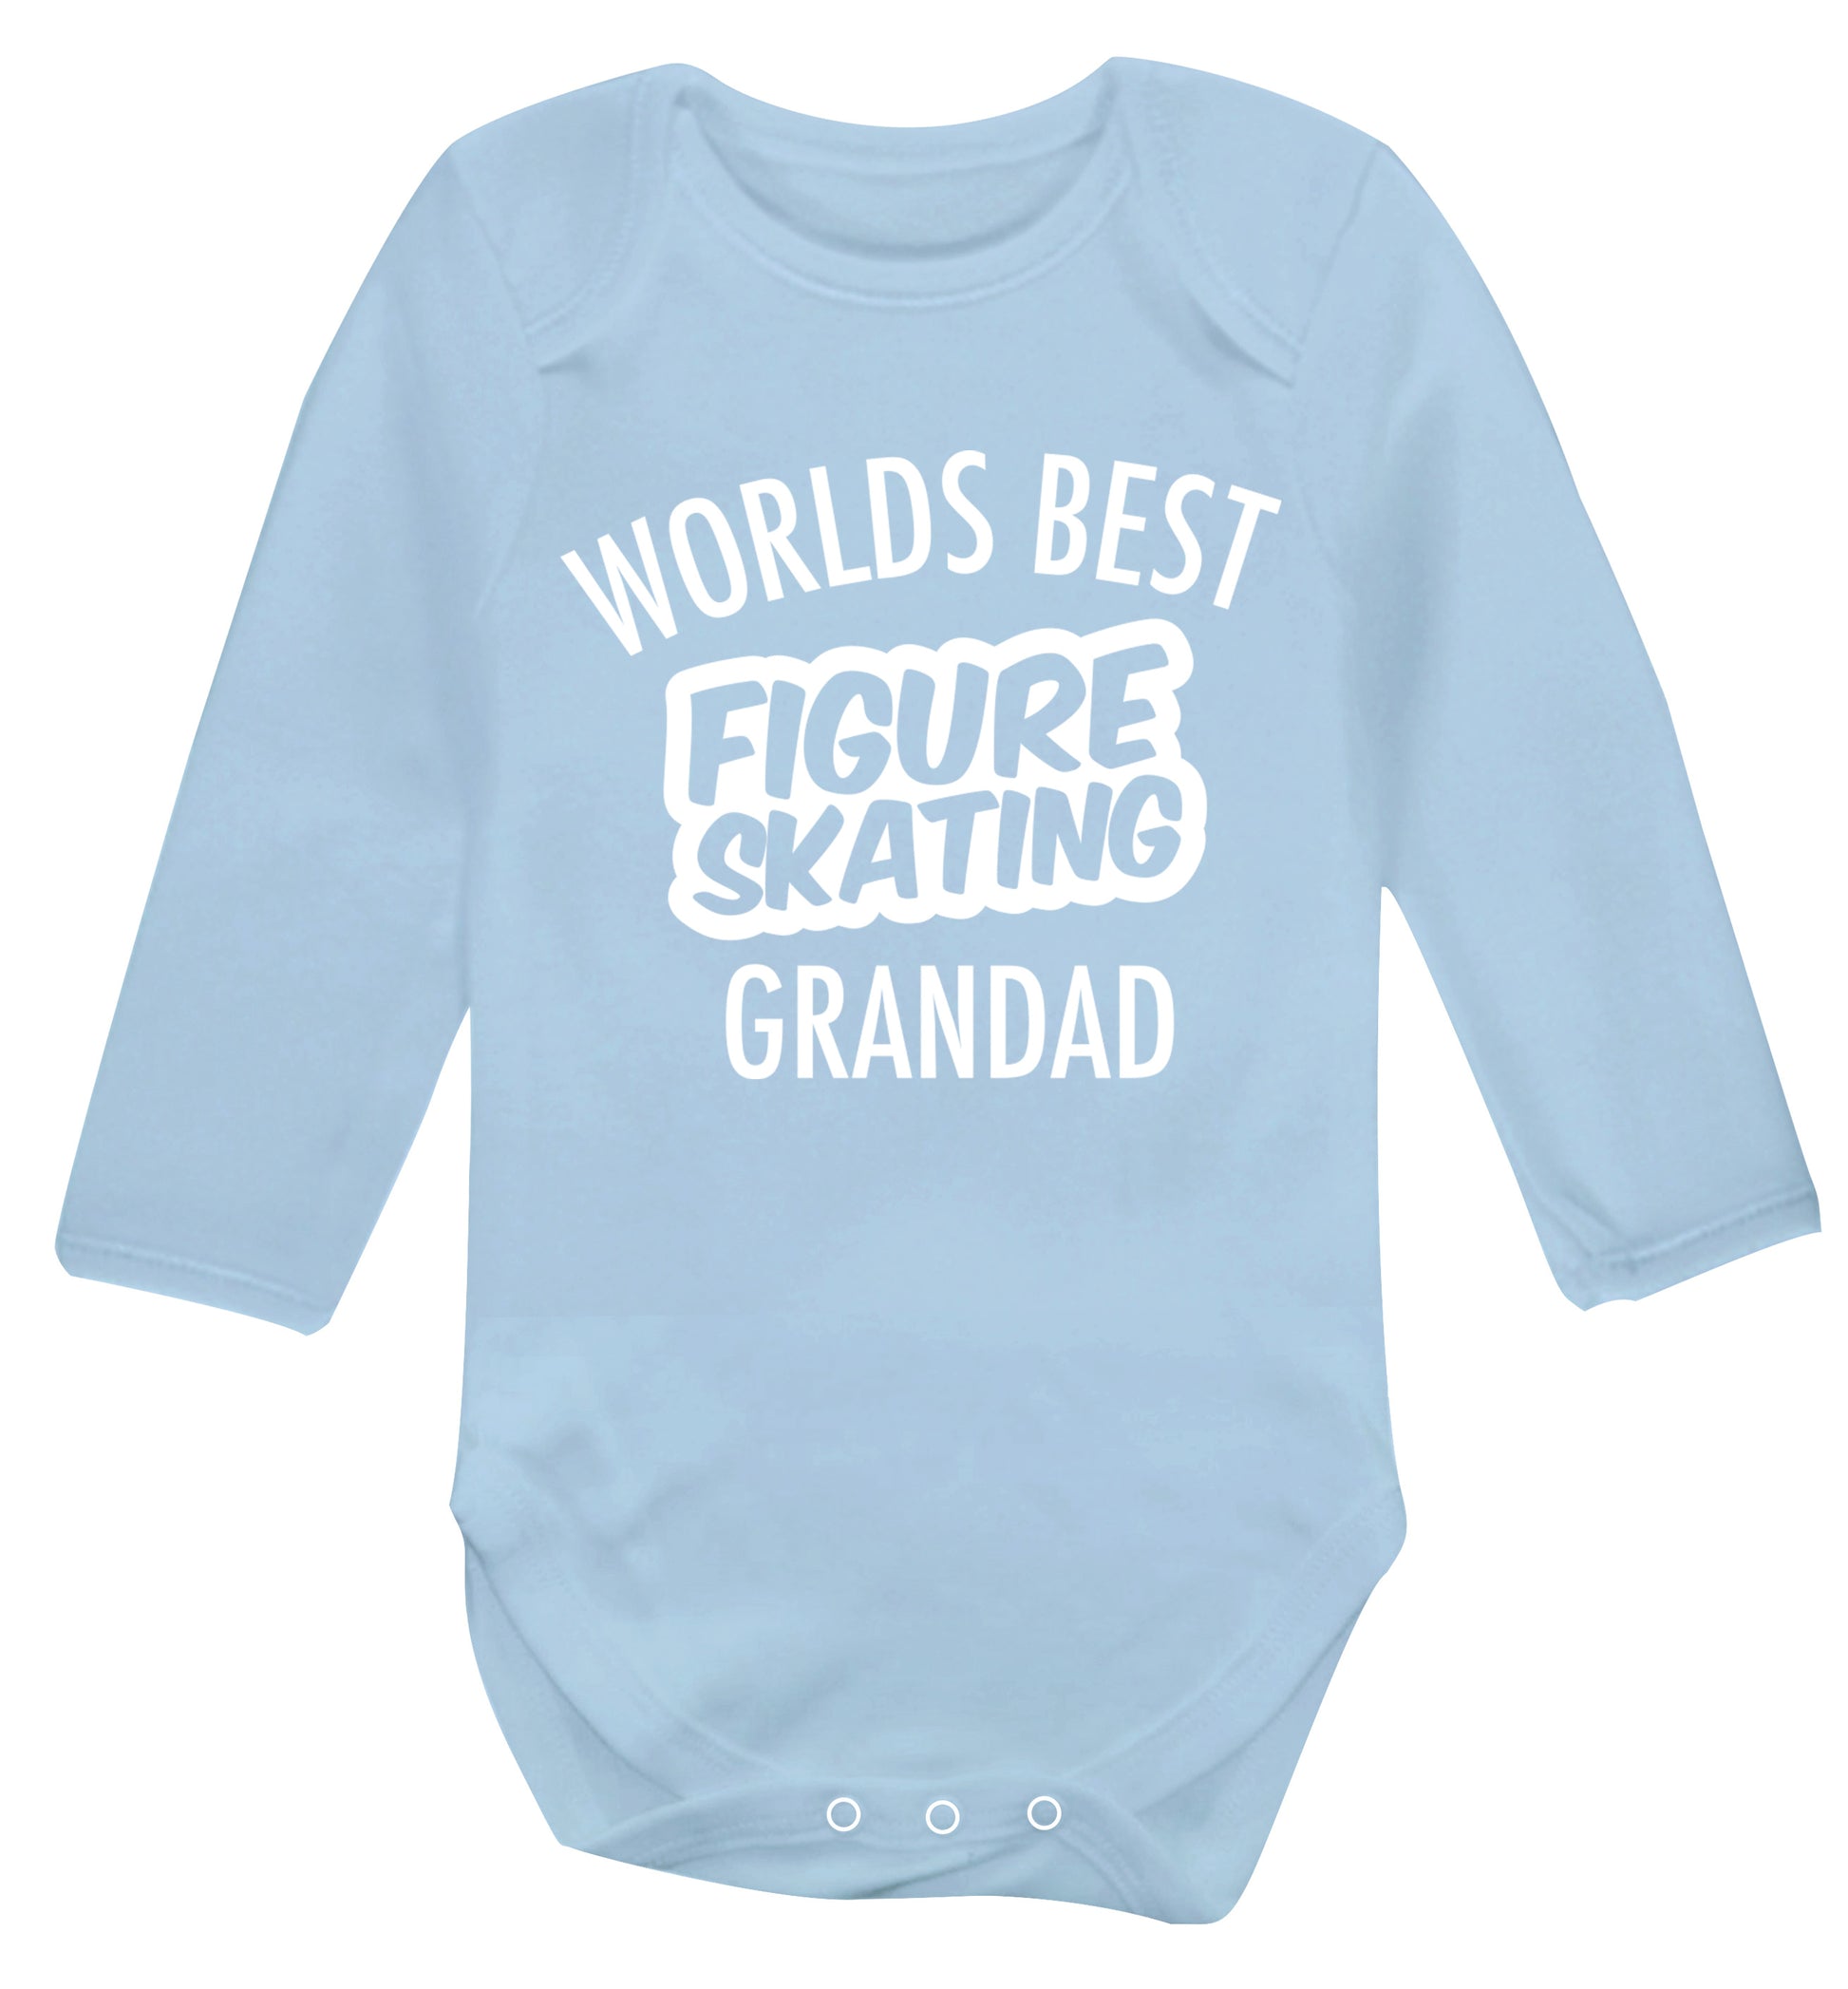 Worlds best figure skating grandad Baby Vest long sleeved pale blue 6-12 months